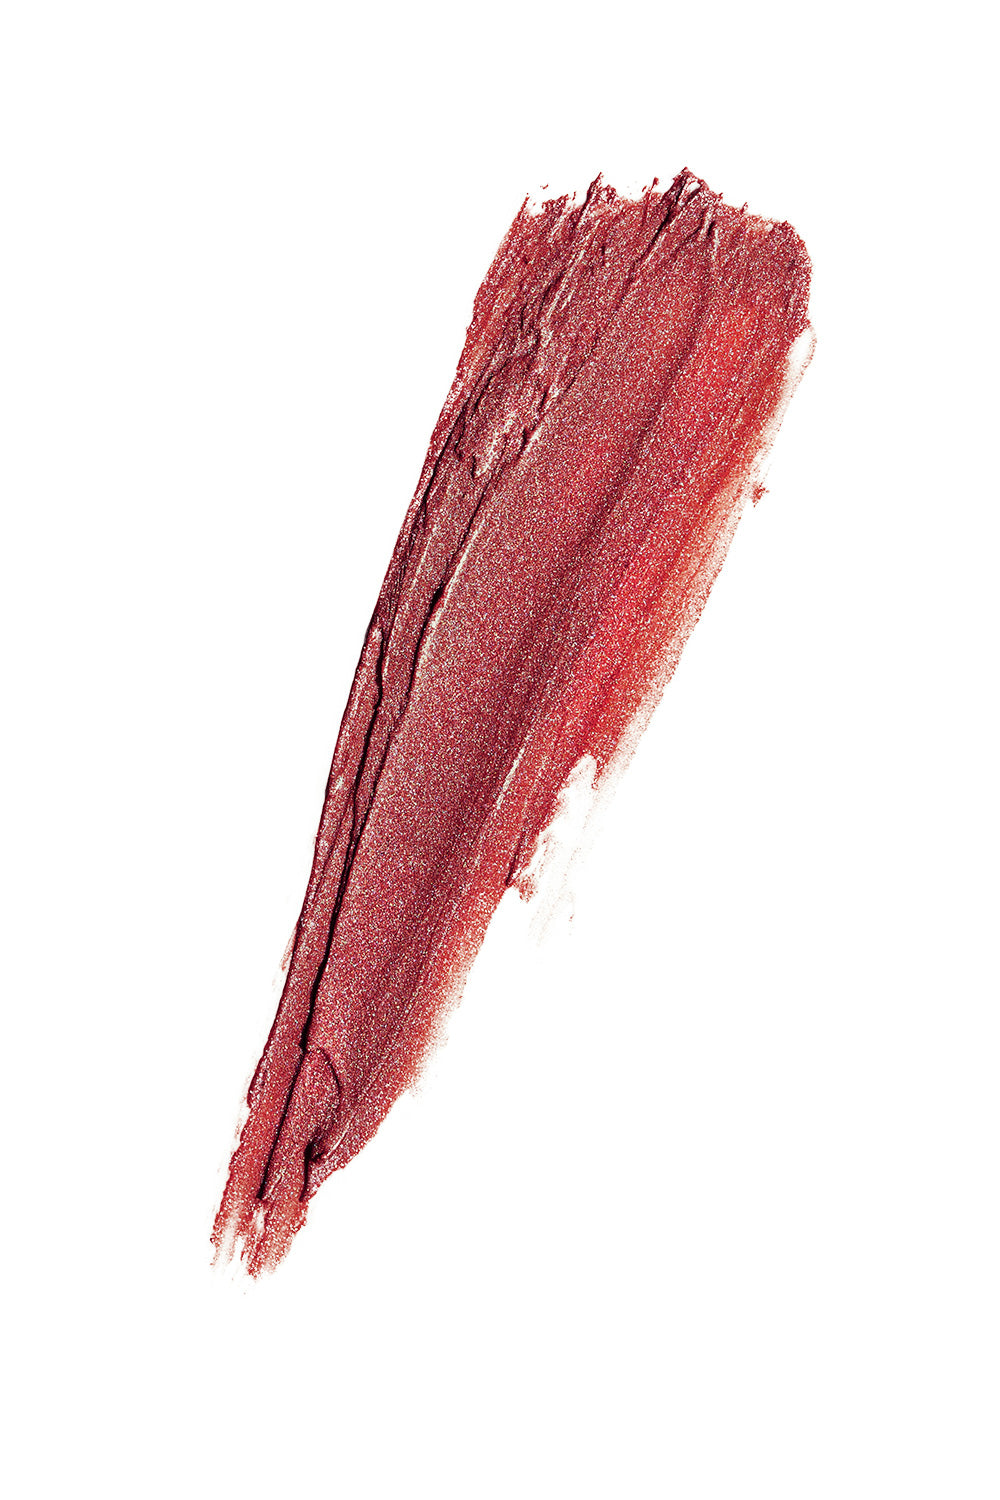 Venus - Type 3 Lipstick